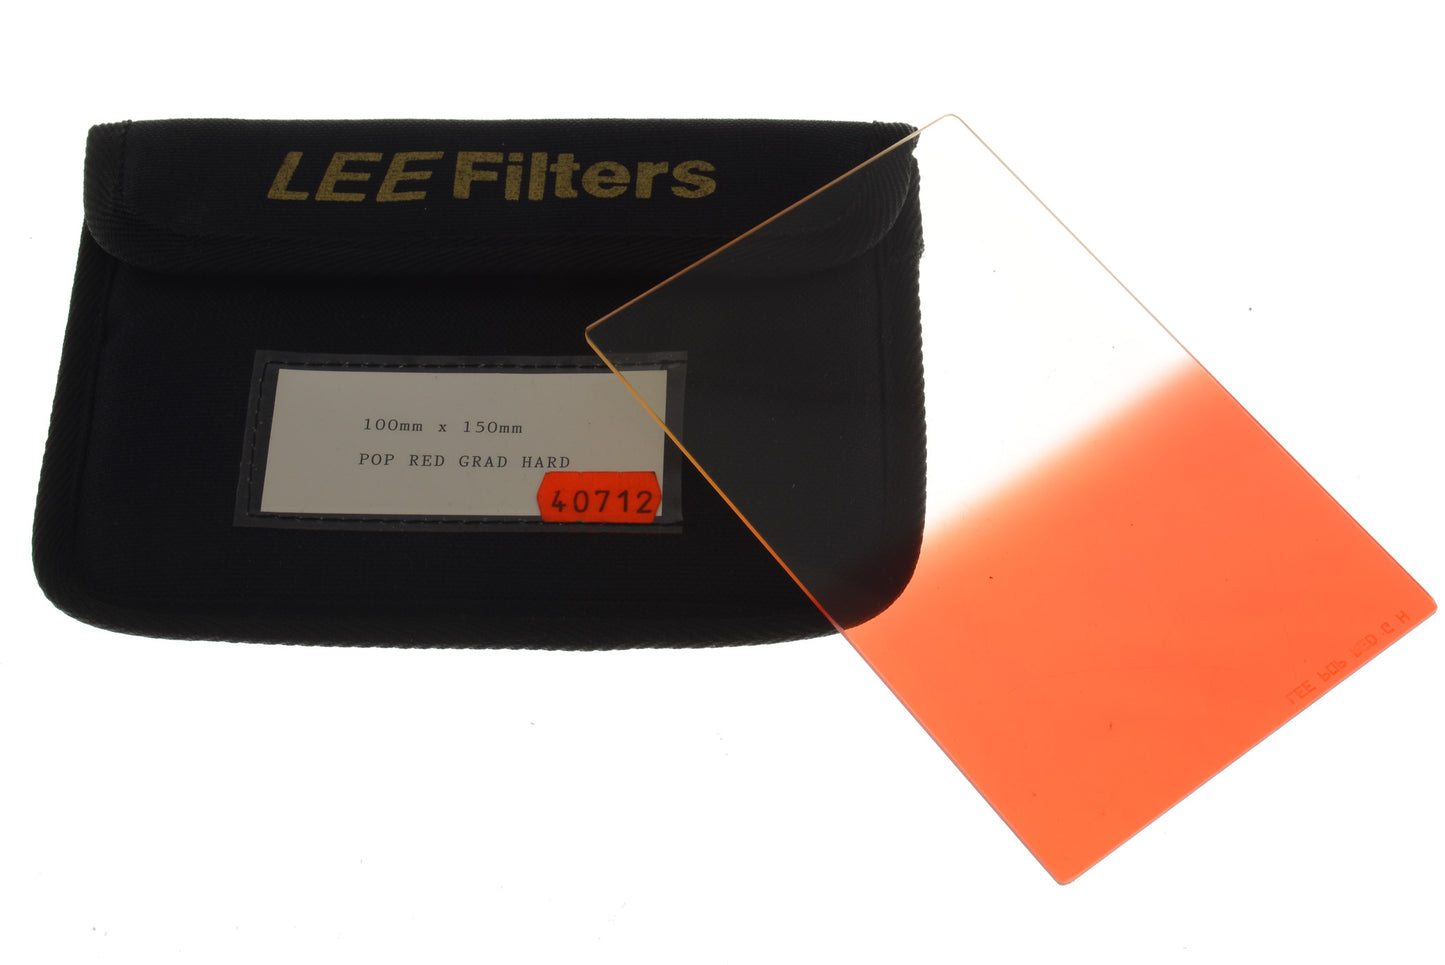 LEE Filters 100x150mm Pop Red Grad Hard - Accessory